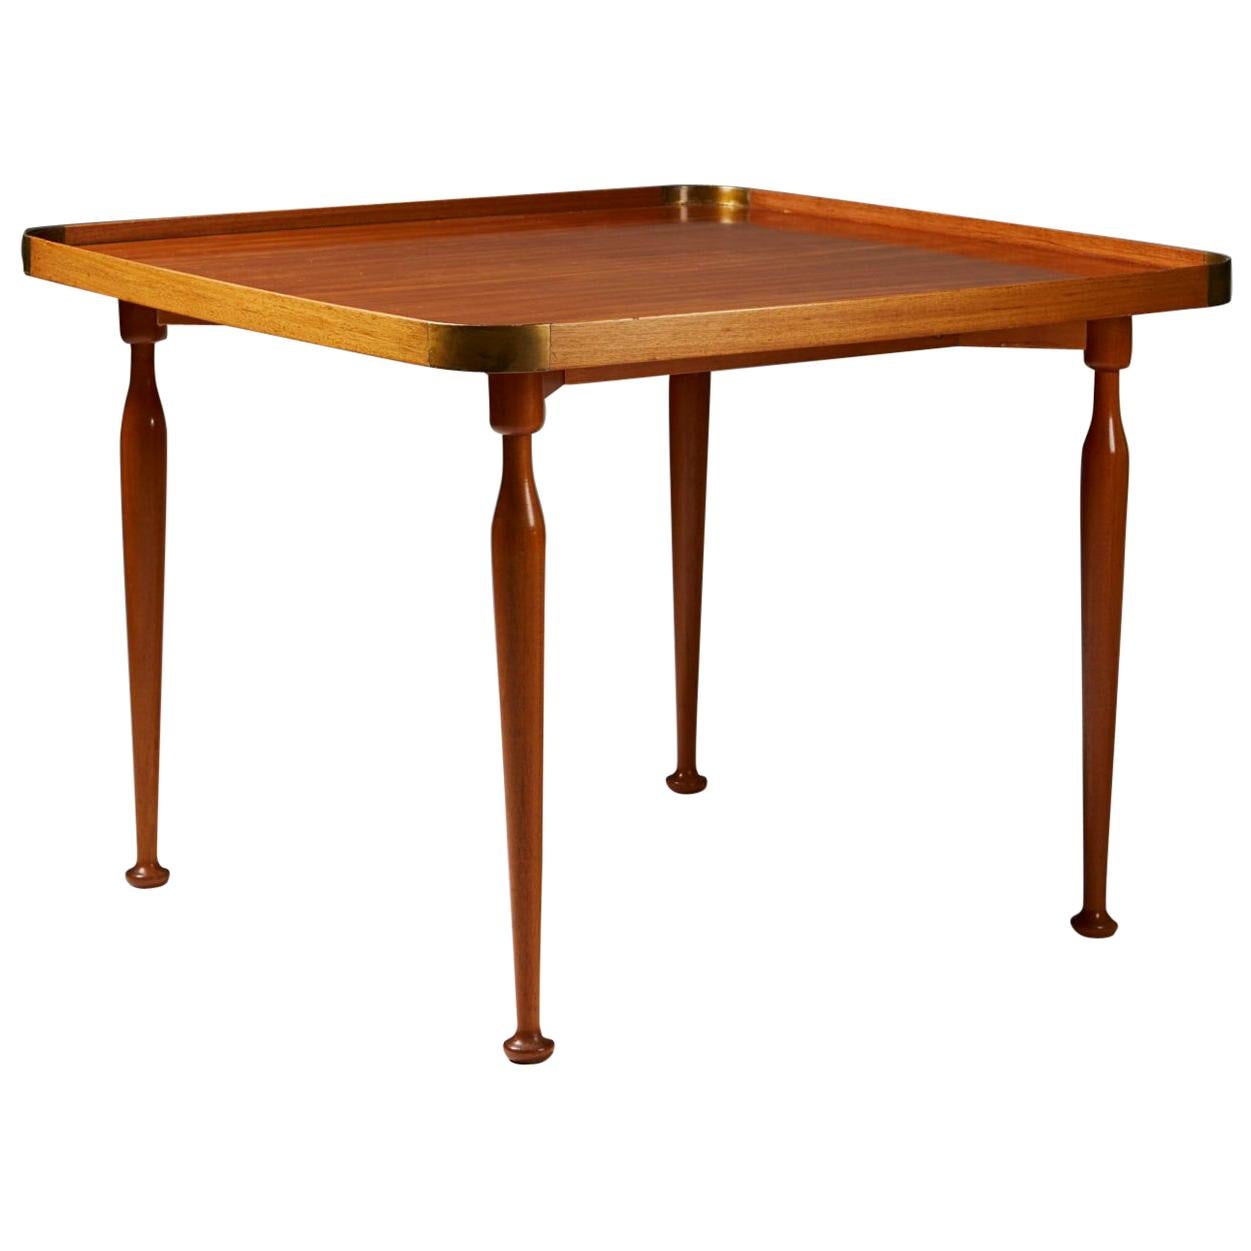 Occasional Table Model 1074 Designed by Josef Frank for Svenskt Tenn, Sweden